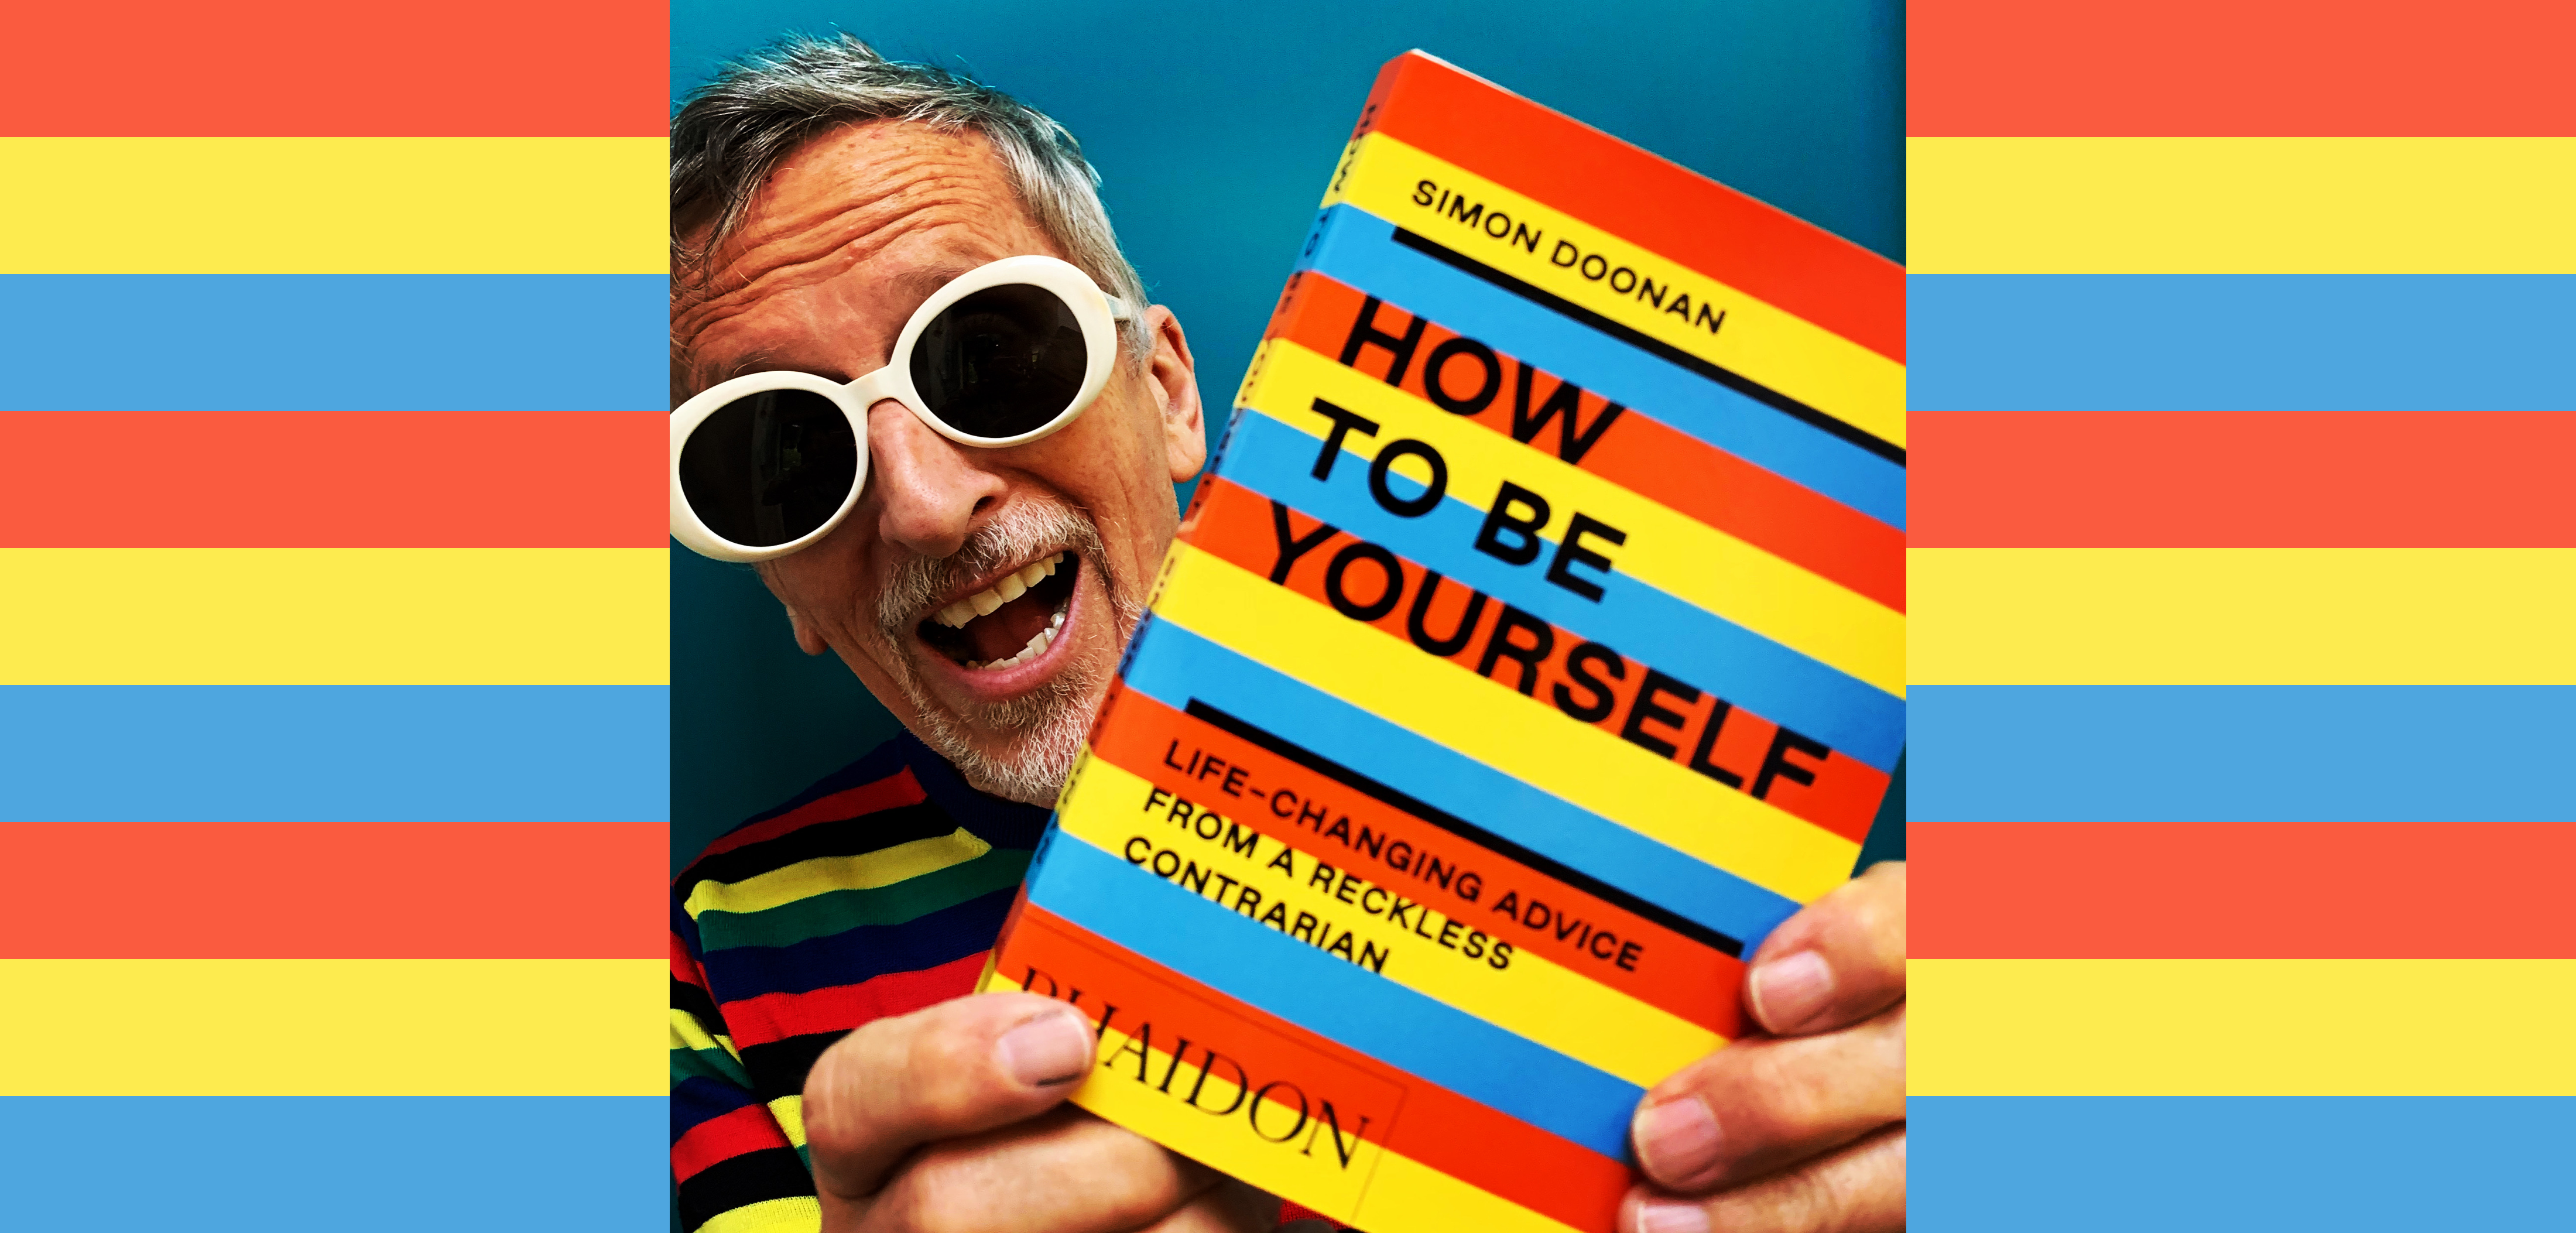 How to Be Yourself, Simon Doonan